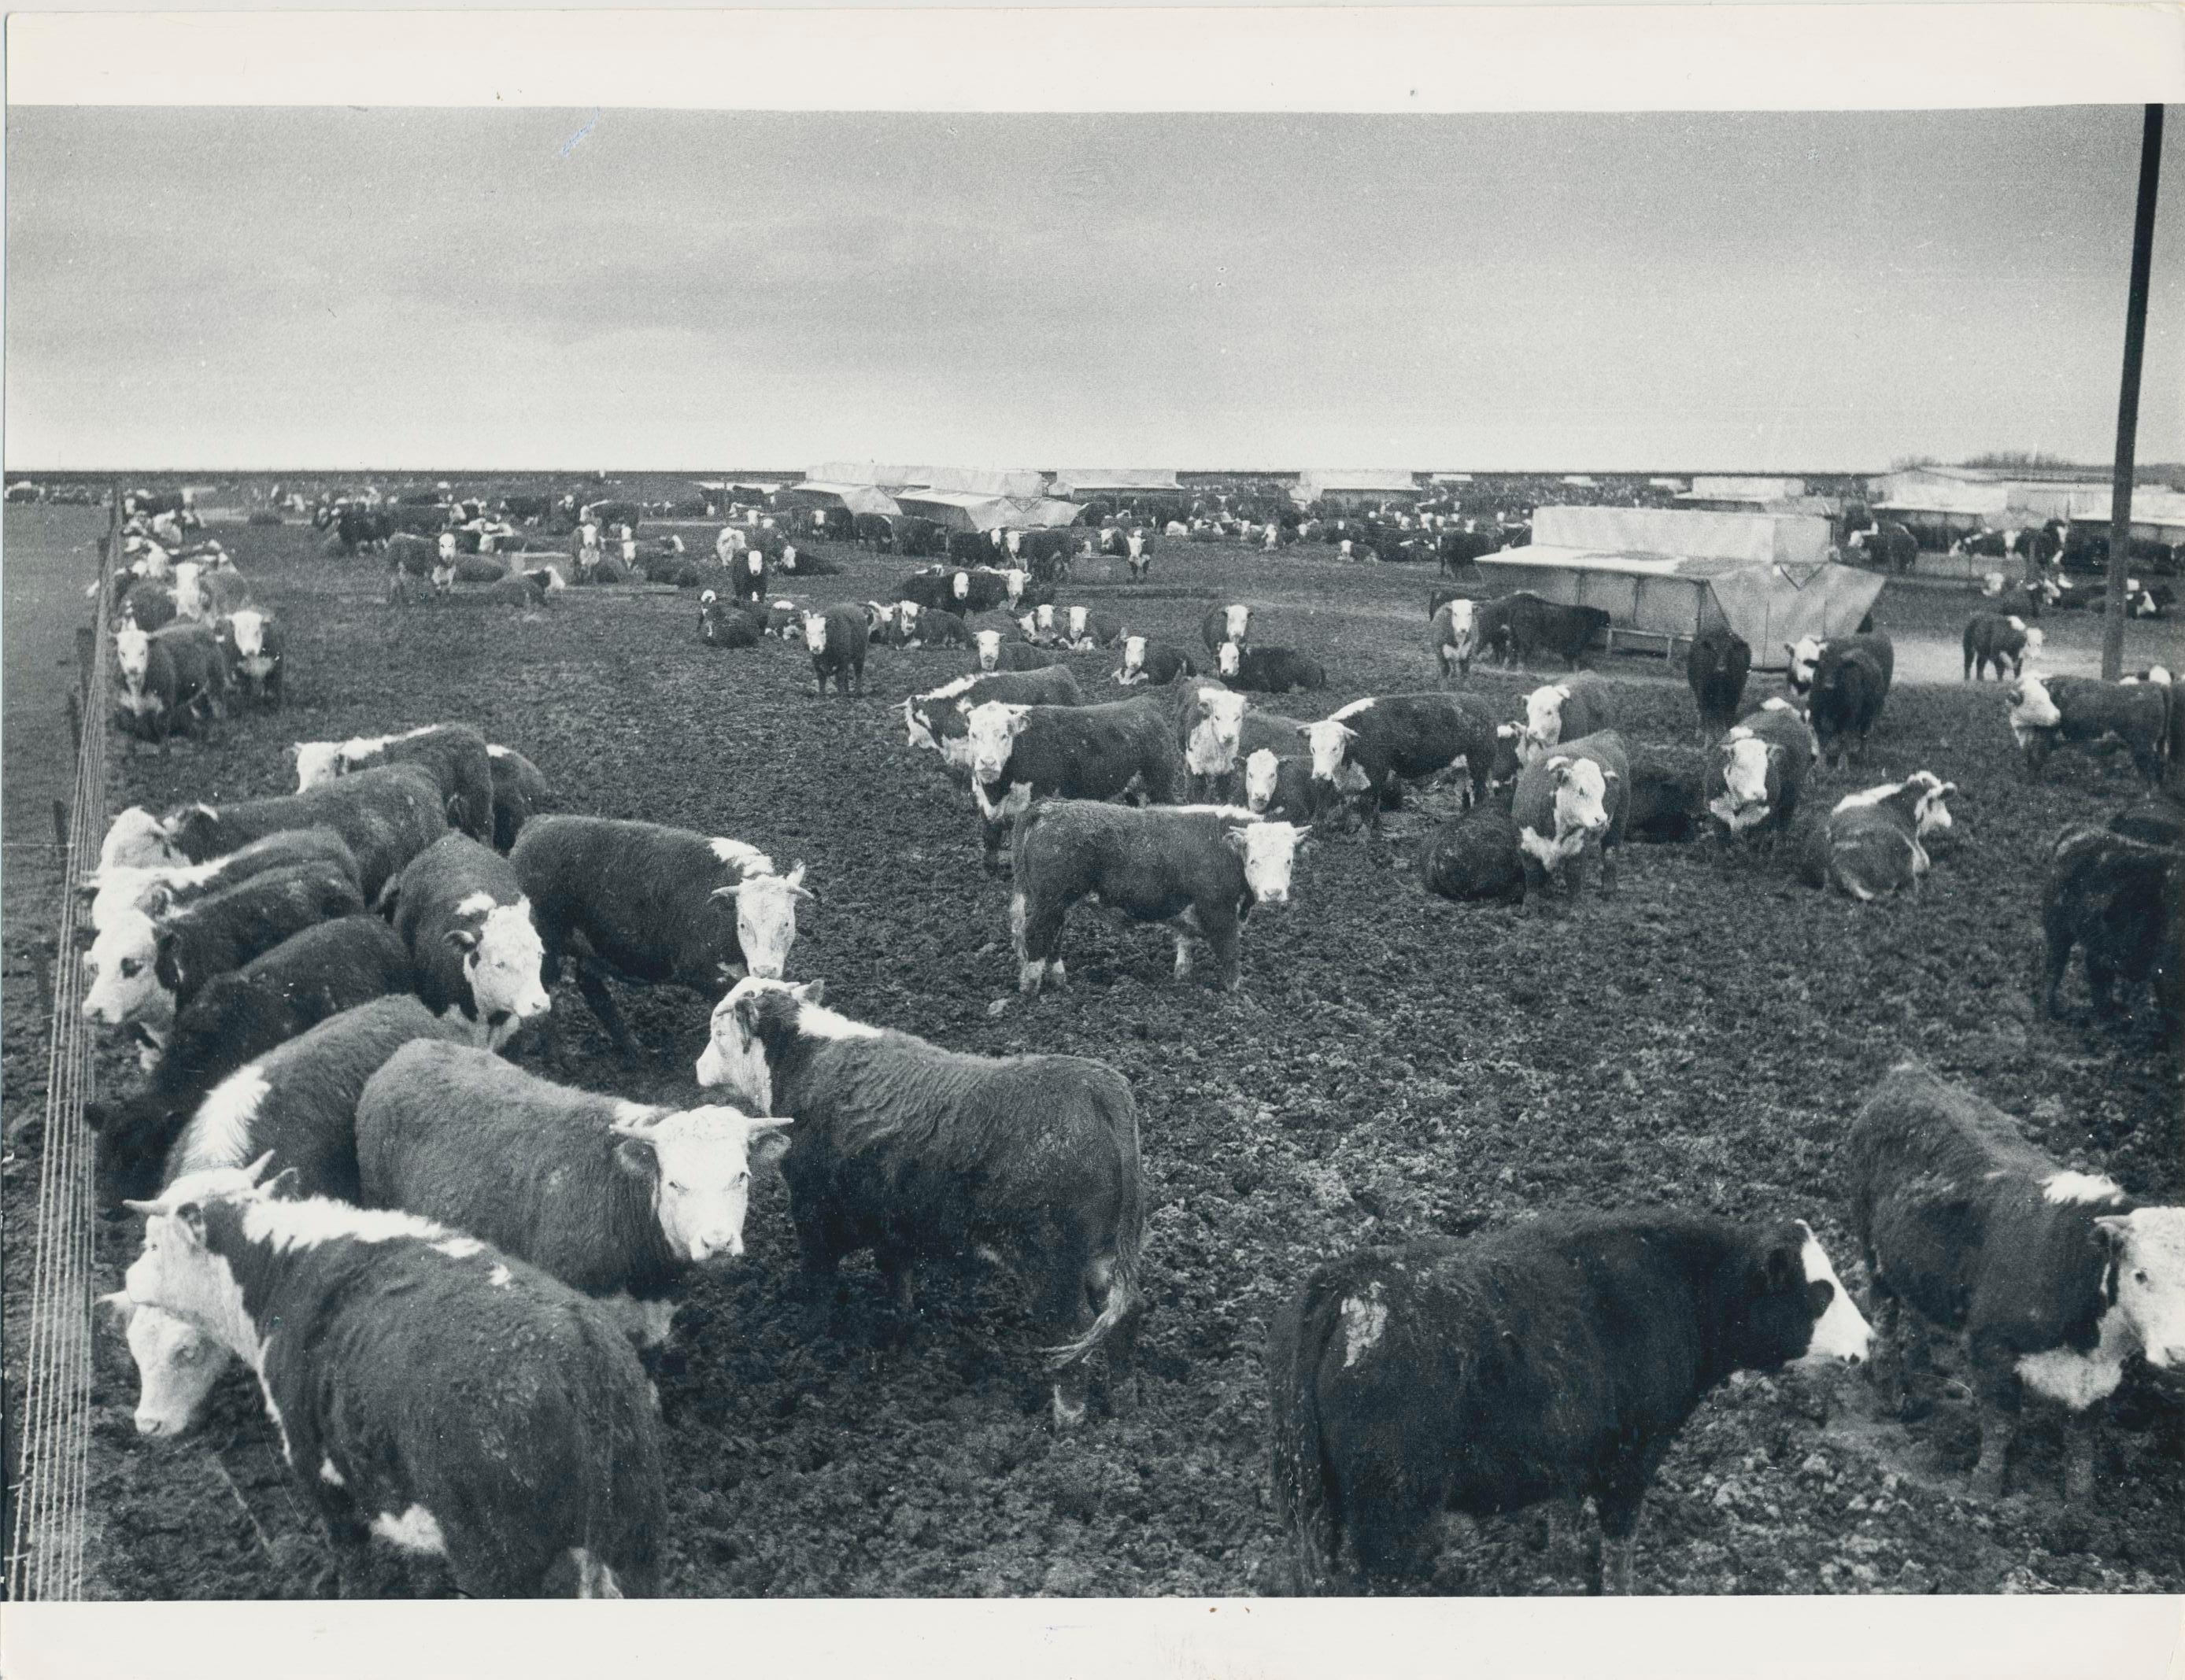 Cows, Farm, Texas, Black and White Photography, USA, 1960, 18, 2 x 23, 5 cm